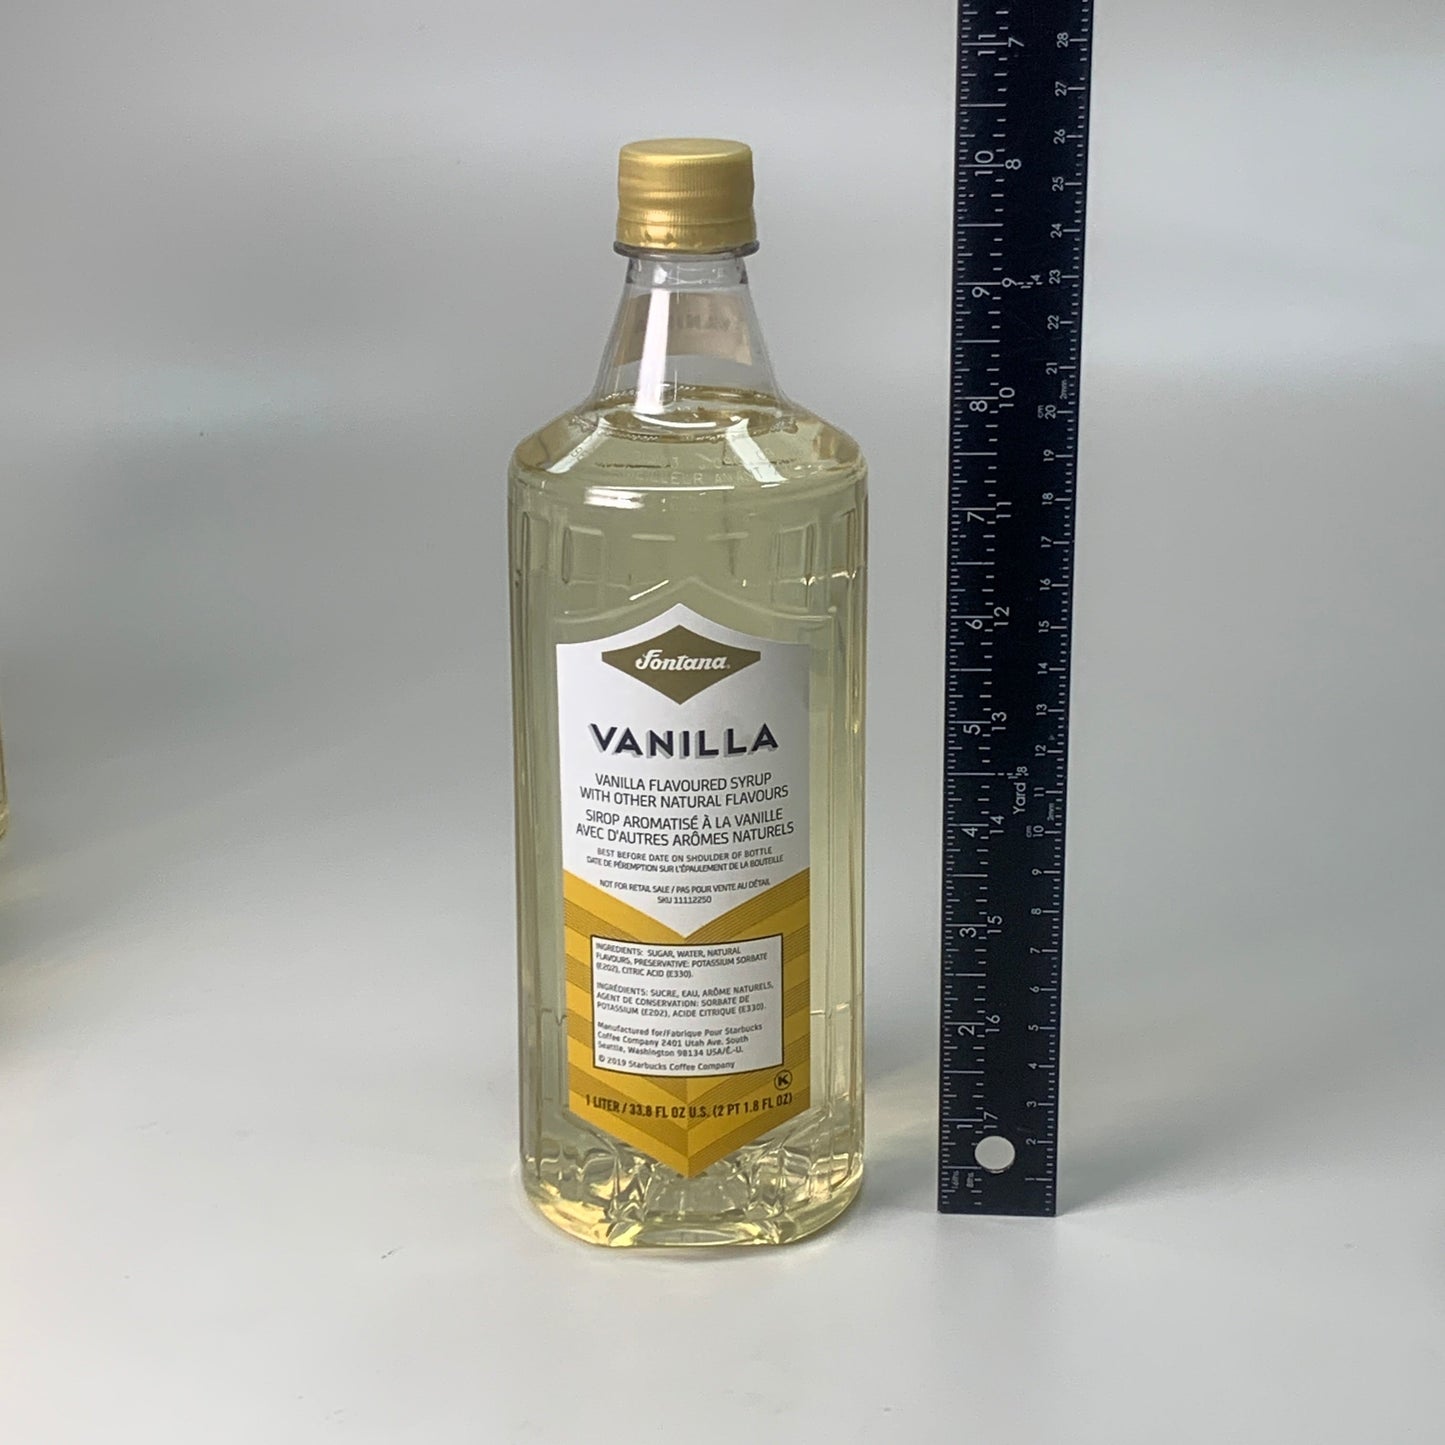 STARBUCKS (4 PACK) Fontana Vanilla Syrup 33.8 fl oz / Bottle BB 06/24 (New)